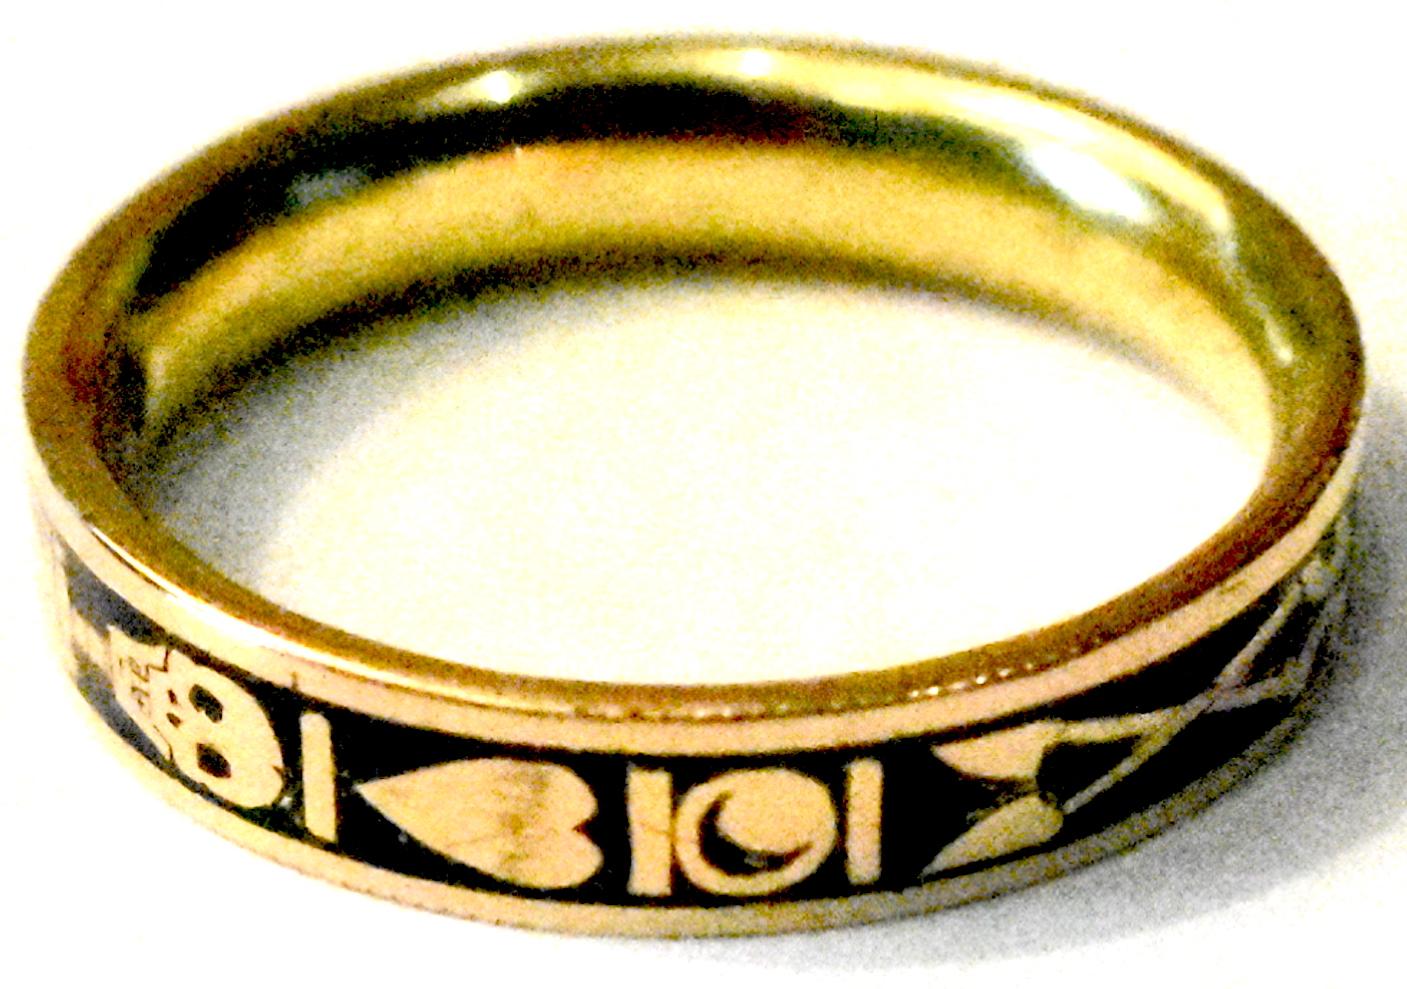 Wonderful Memento Mori skeleton ring enameled in black with gold symbols. Memento Mori means “remember you must die